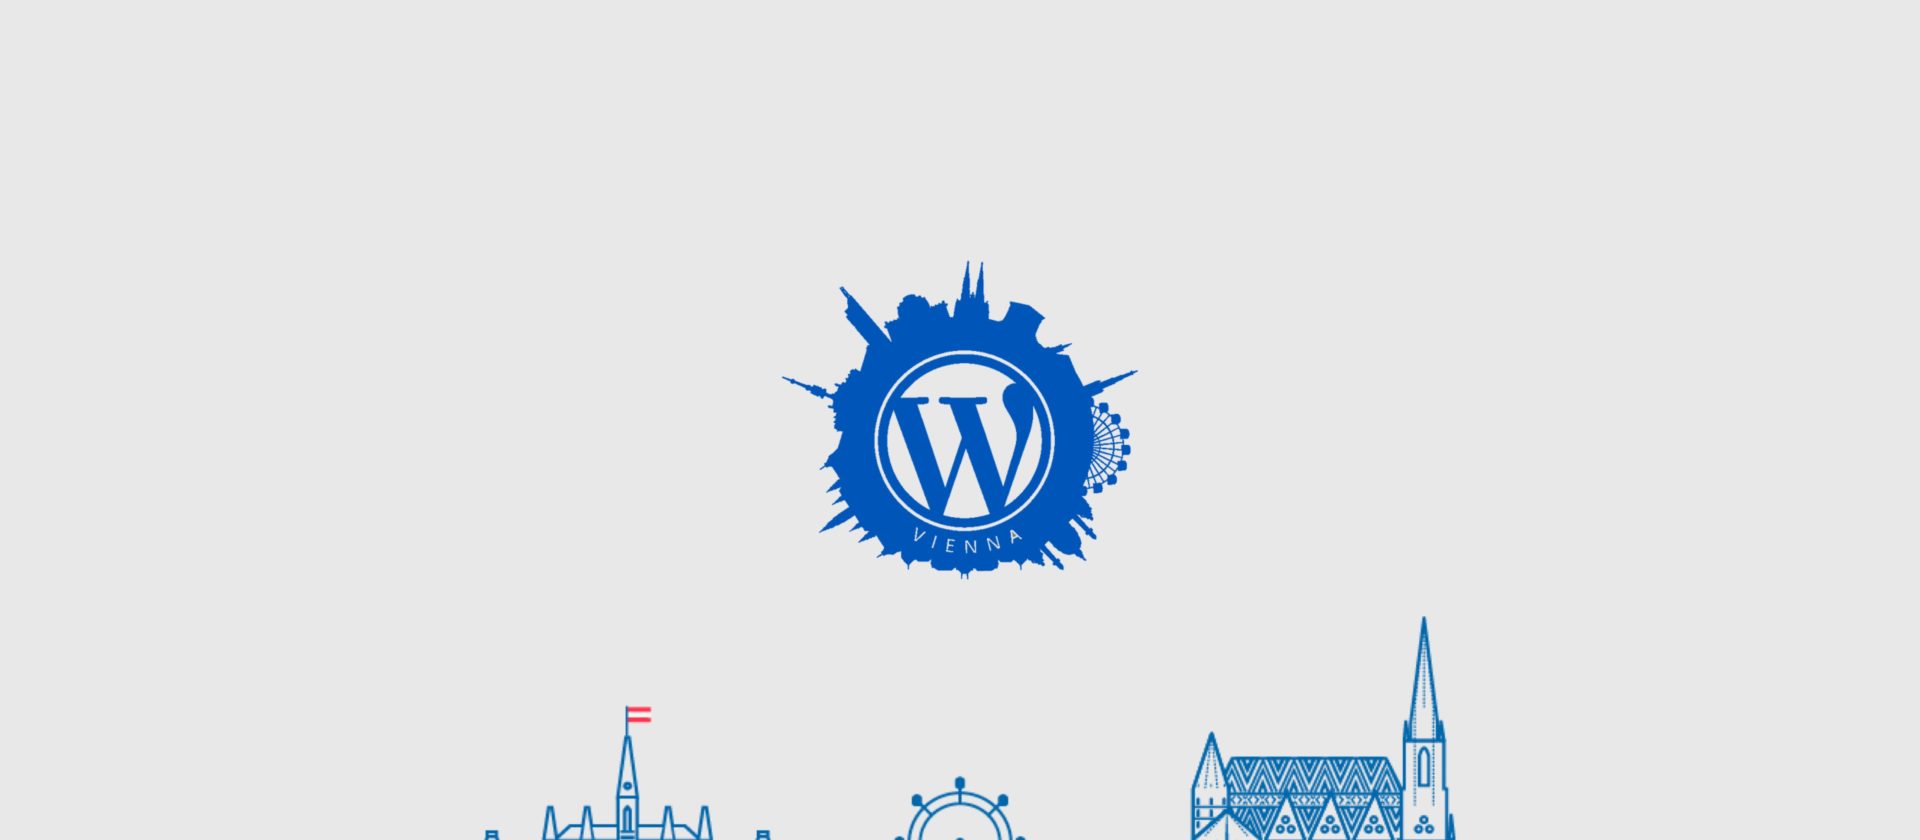 WordPress WordCamp Wien 2017 logo